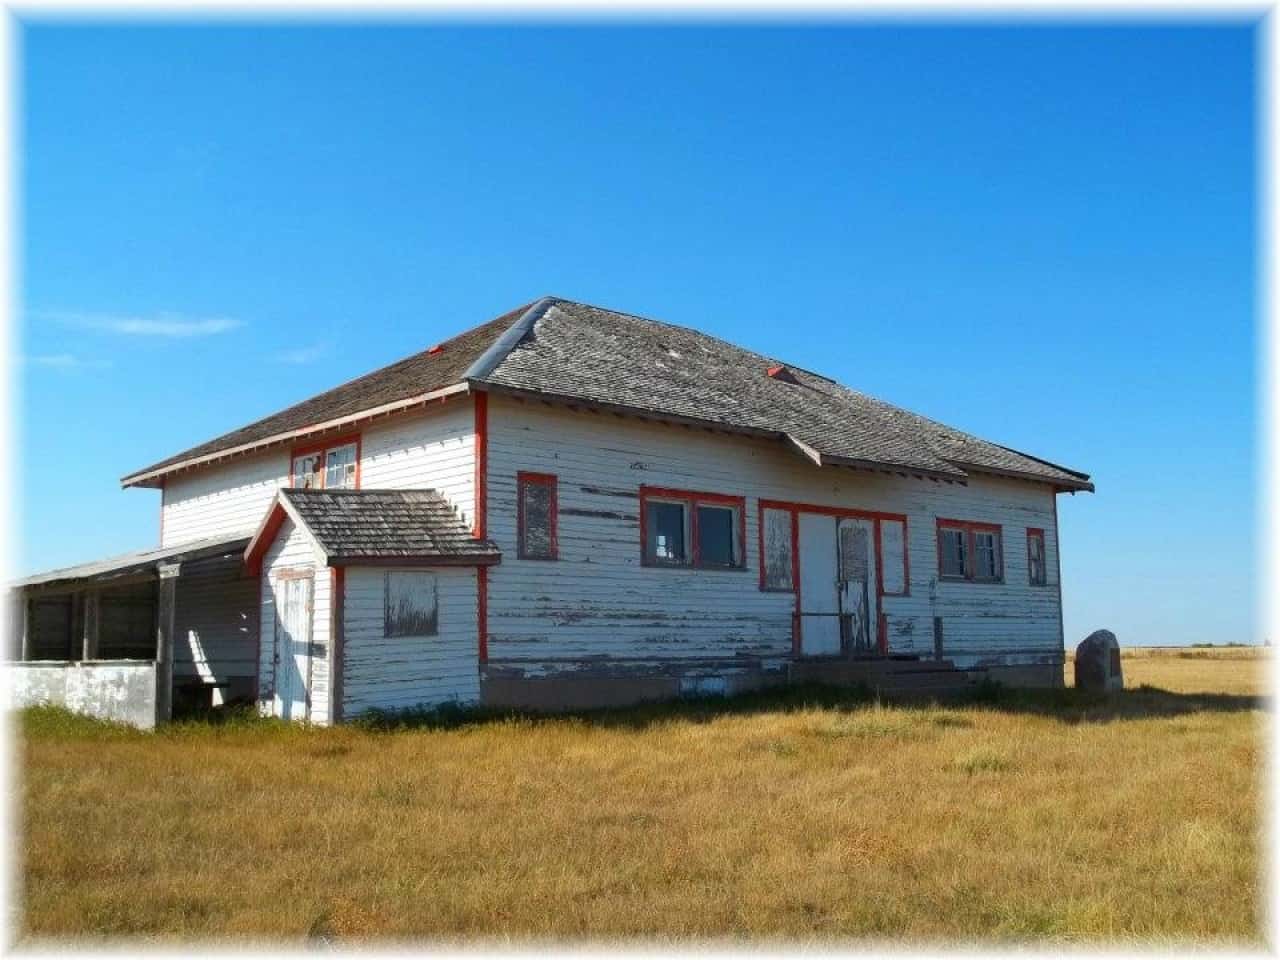 Old School Saskatchewan